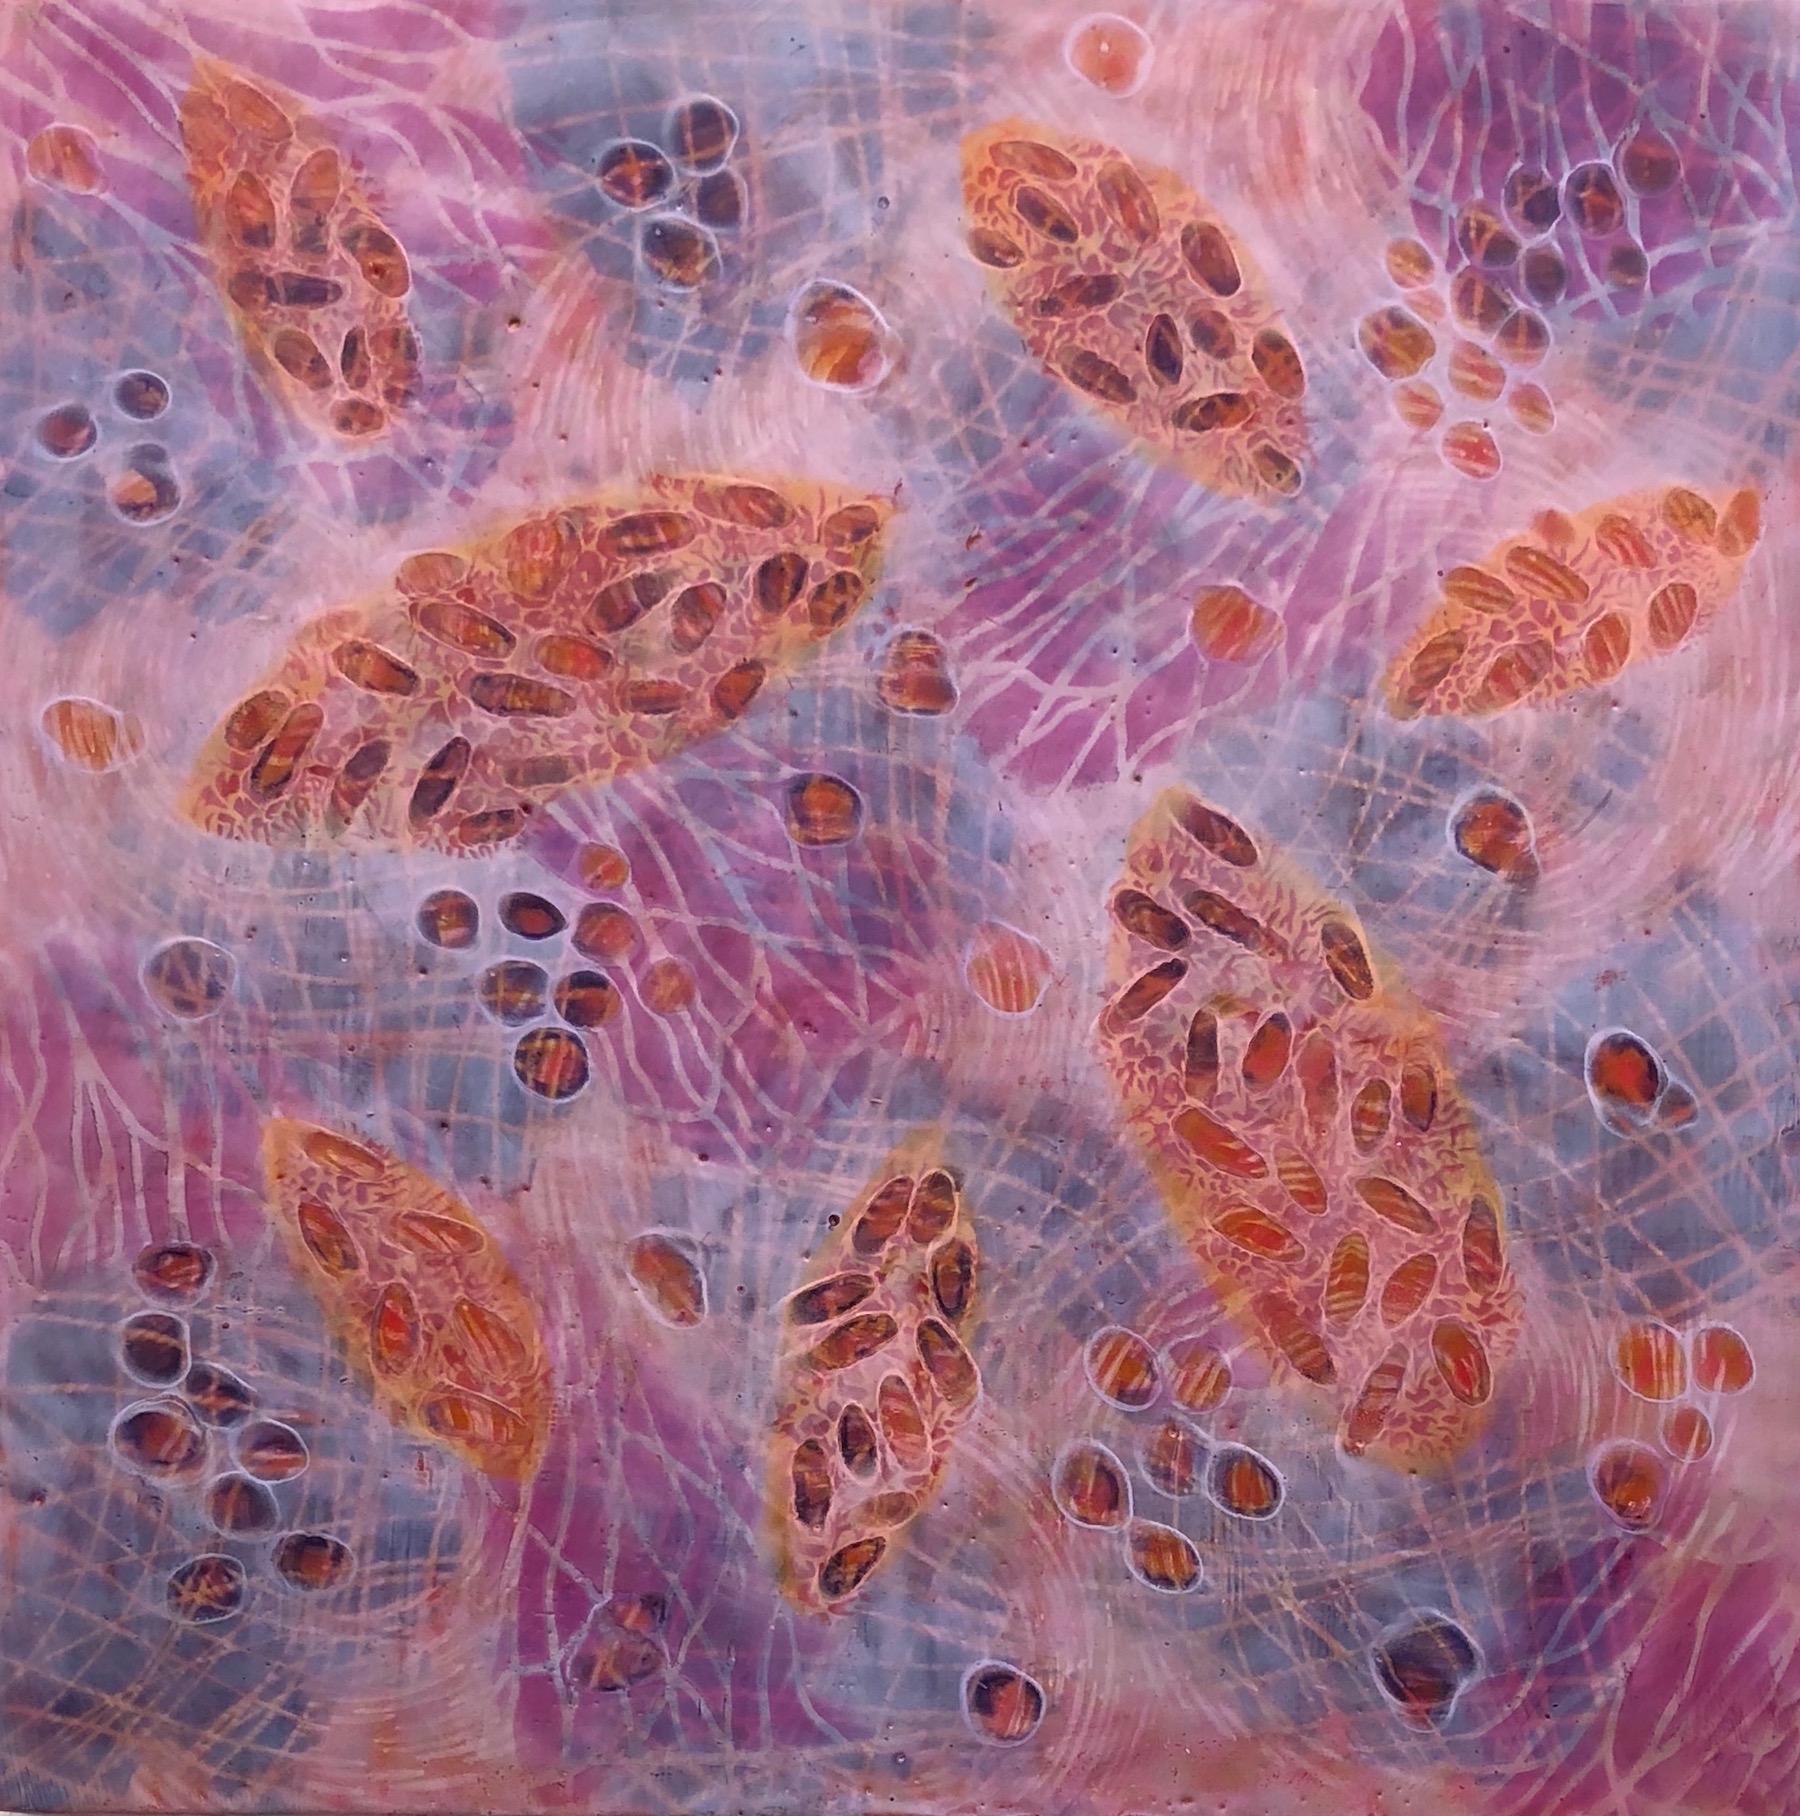 "Bio Patterns 17", encaustic, pastel, abstract, microscopic, pink, orange, white